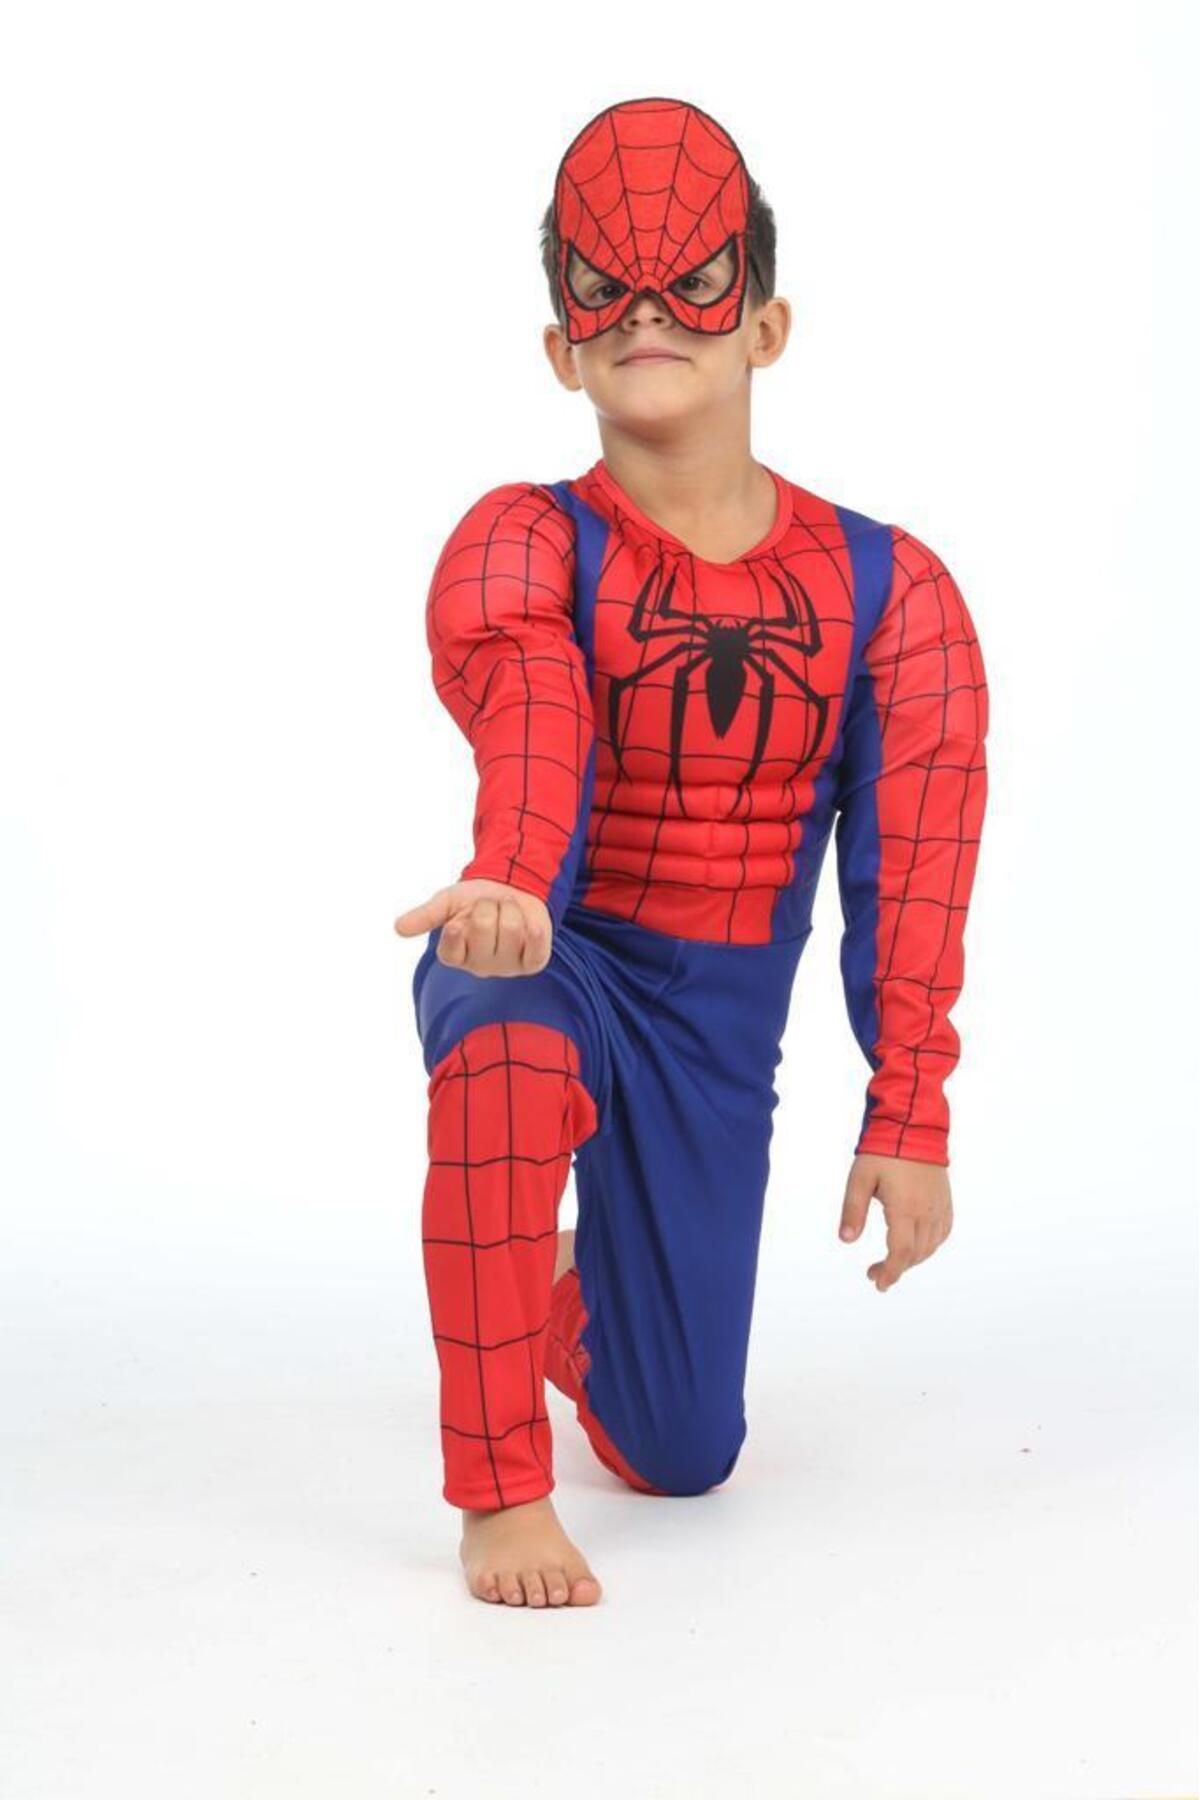 Mashotrend Kaslı Spiderman Kostümü + Göz Maske - Örümcek Adam Kostüm - Dolgulu Spiderman Cosplay